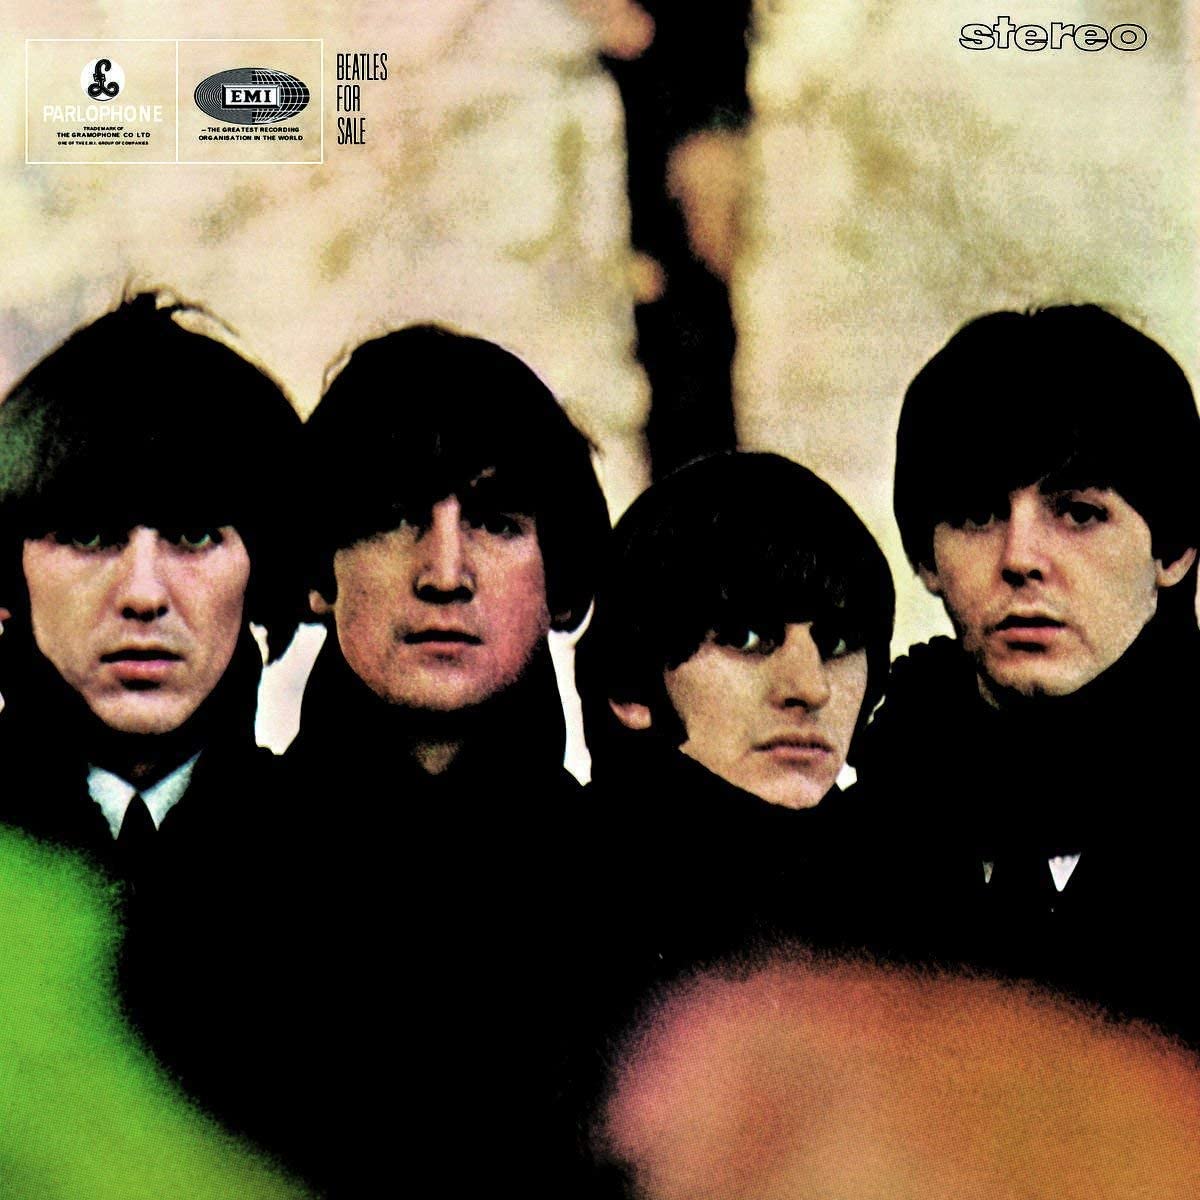 Beatles, The/Beatles For Sale [LP]